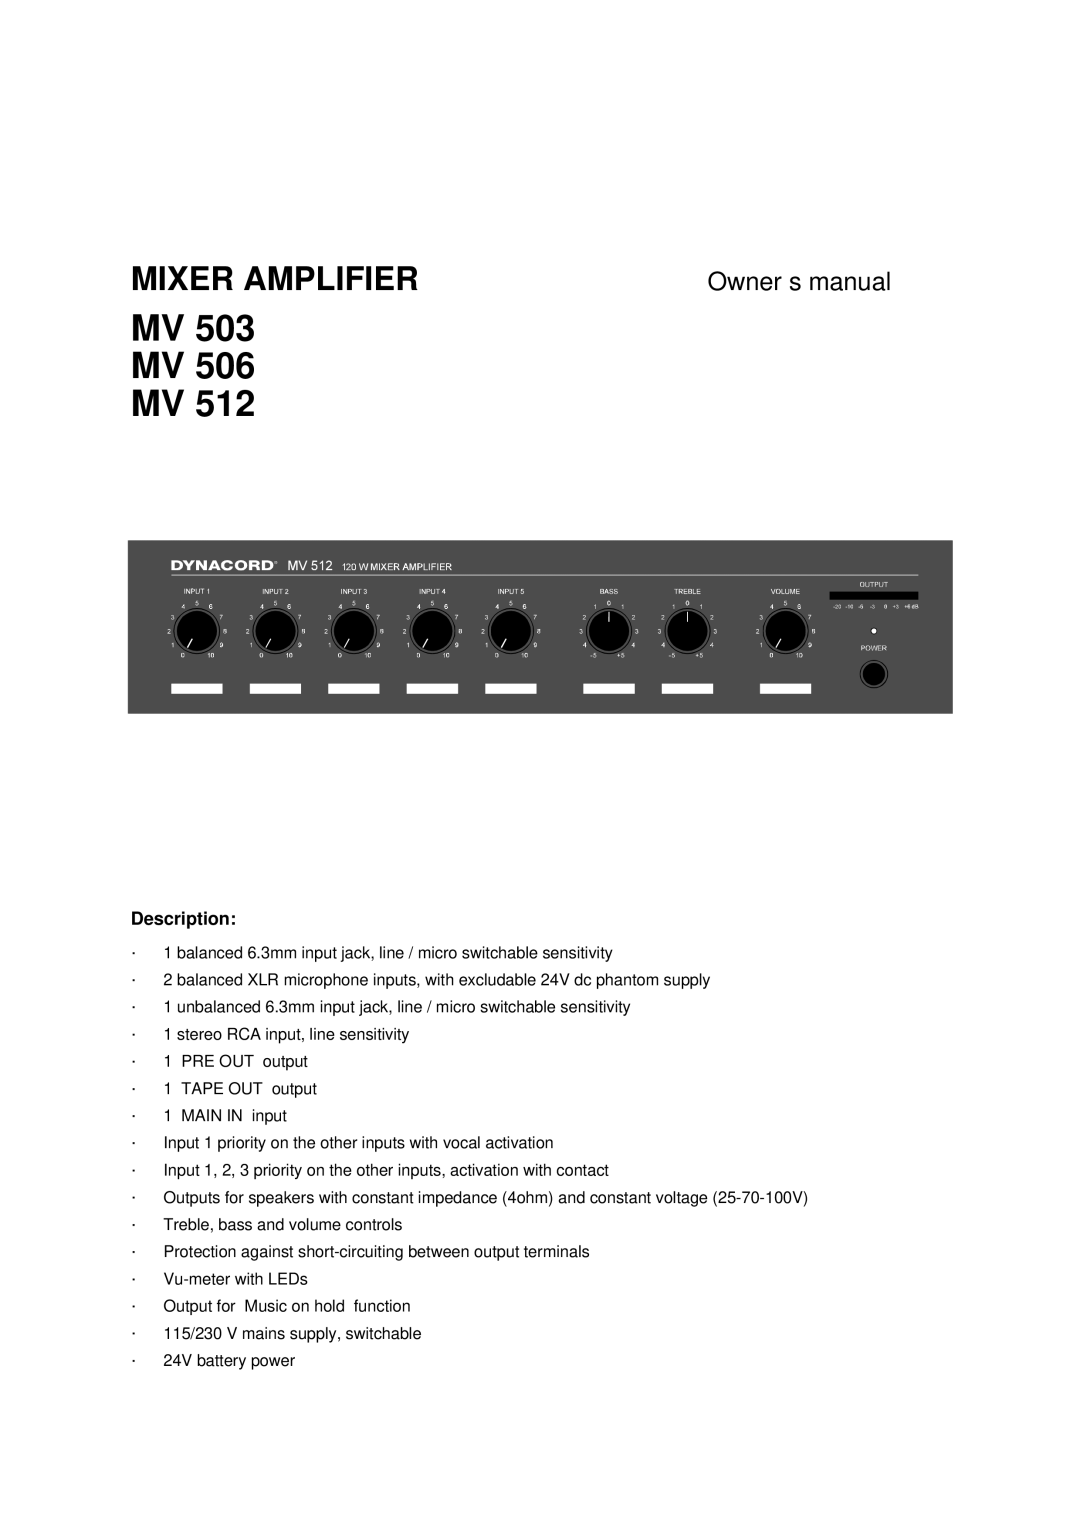 Dynacord MIXER AMPLIFIER, MV 503, MV 512, MV 506 owner manual Description 